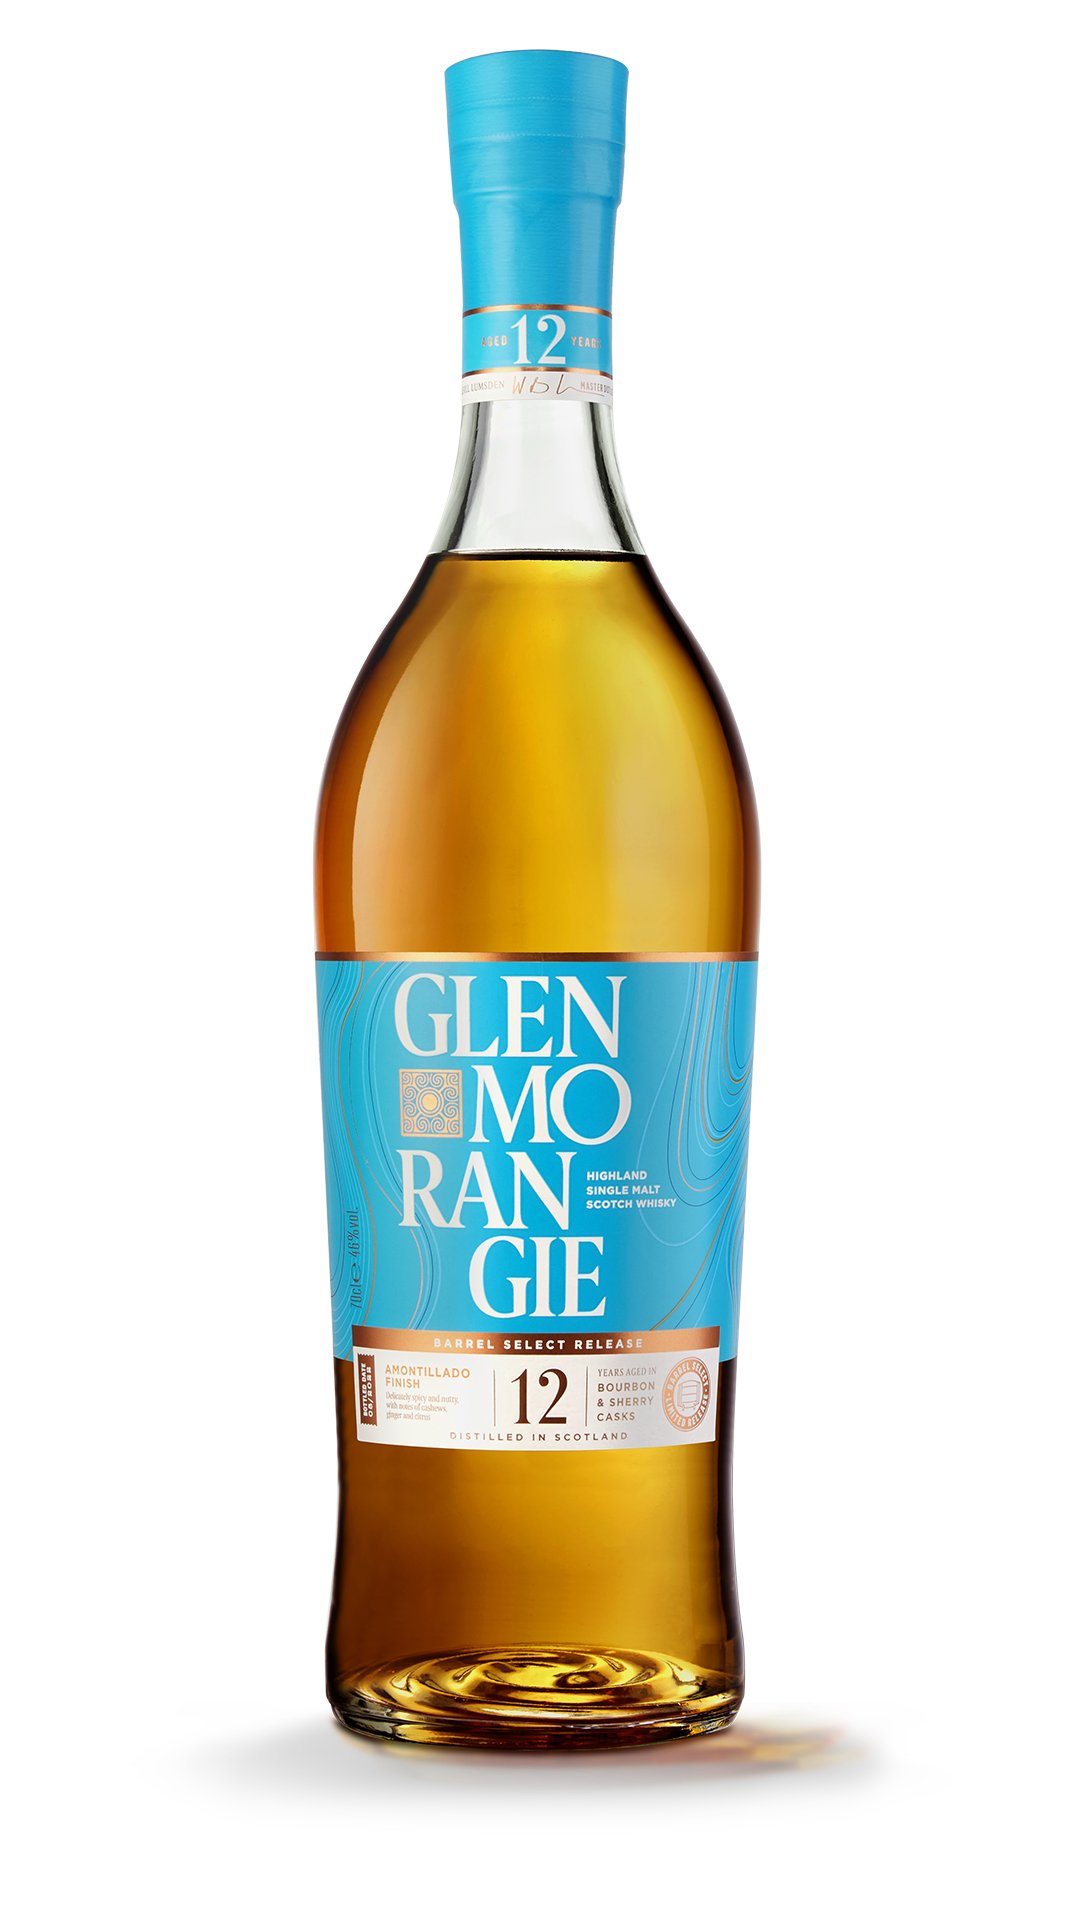 Best Shot Whisky Reviews : Glenmorangie Signet Review